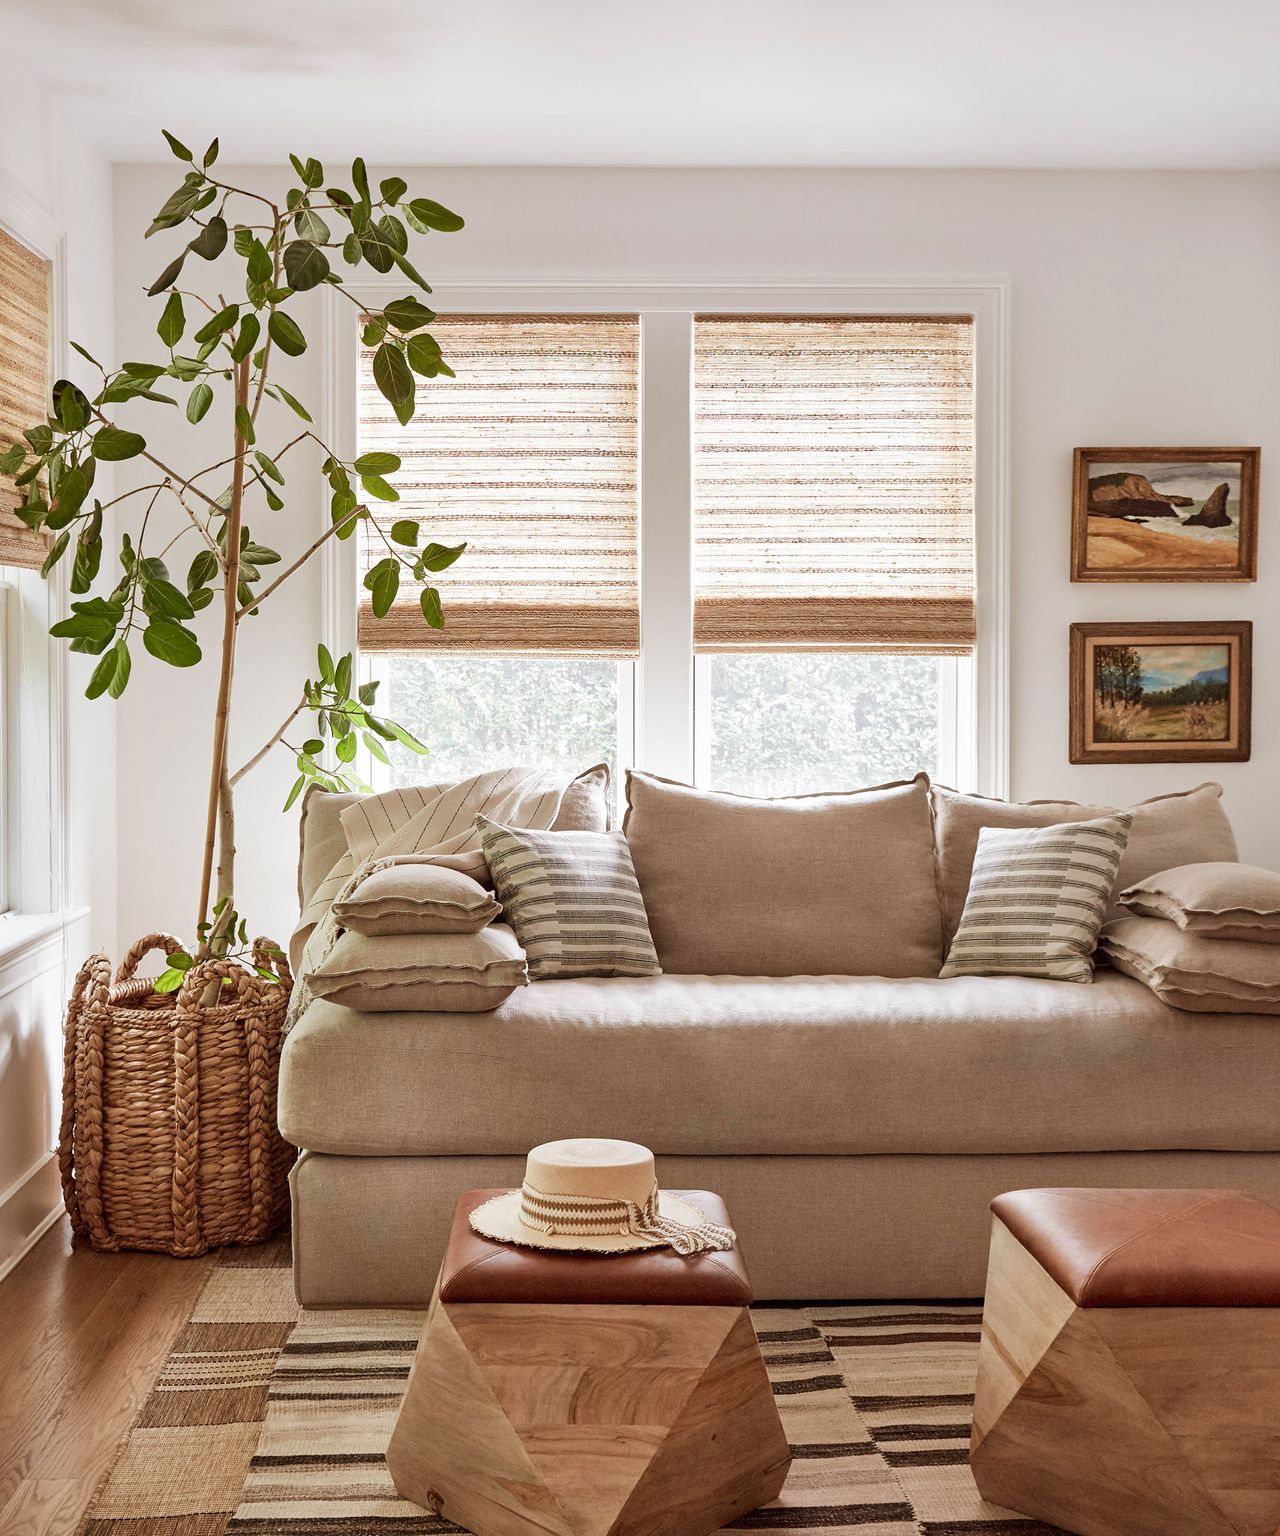 Living room corner ideas: 10 stylish ways to decorate an empty corner